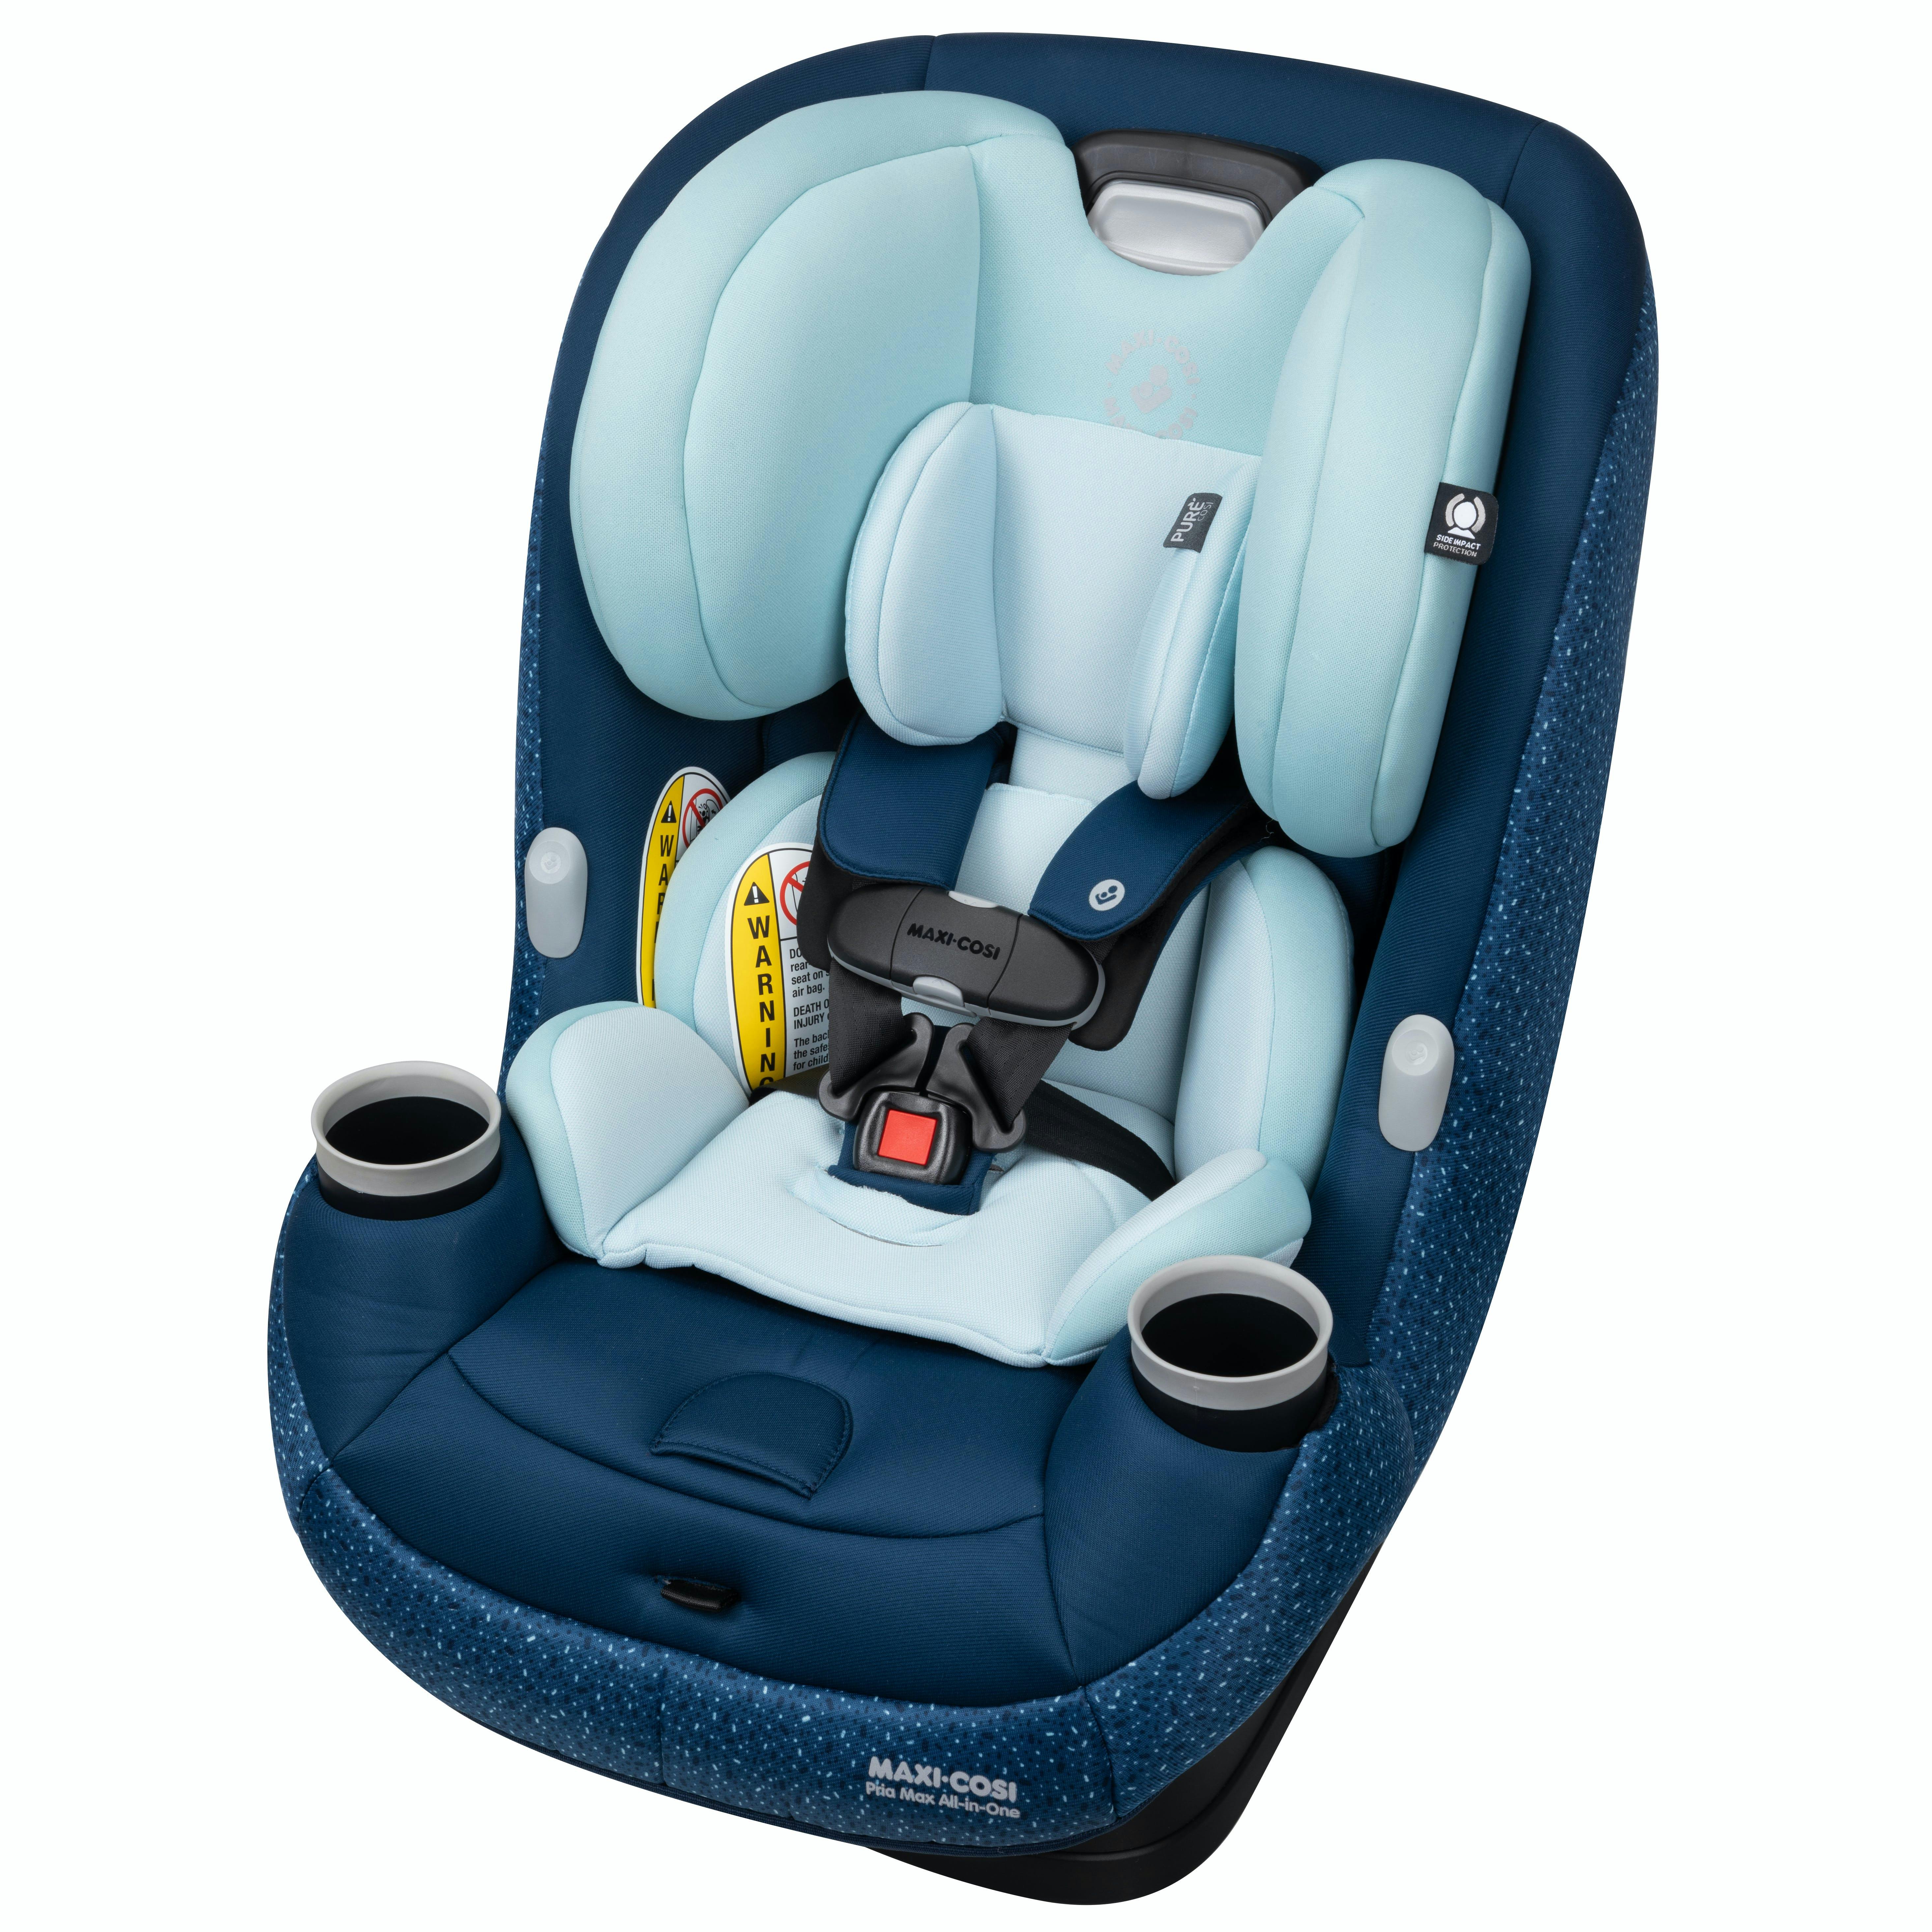 Maxi-Cosi Pria Max All-in-One Convertible Car Seat